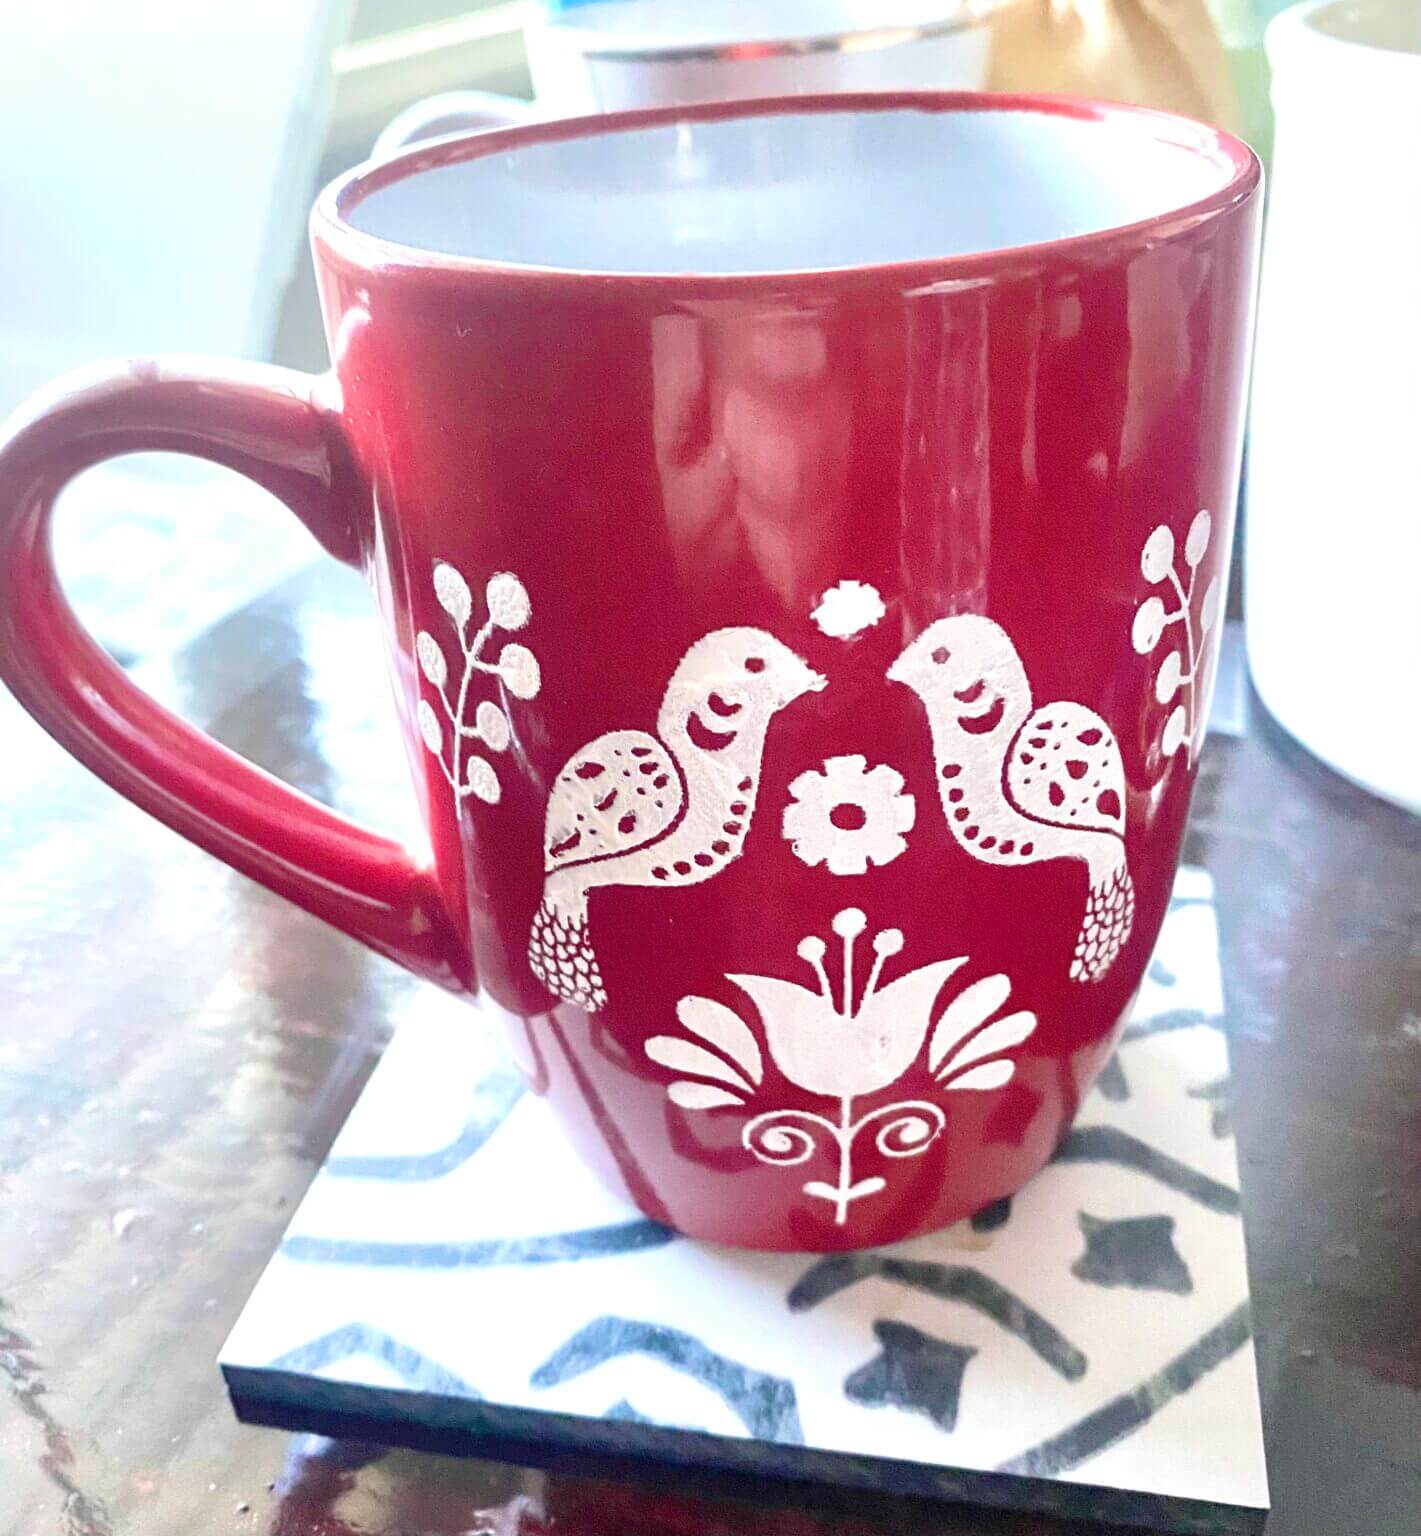 How to make DIY ceramic mugs - Southern Crush at Home